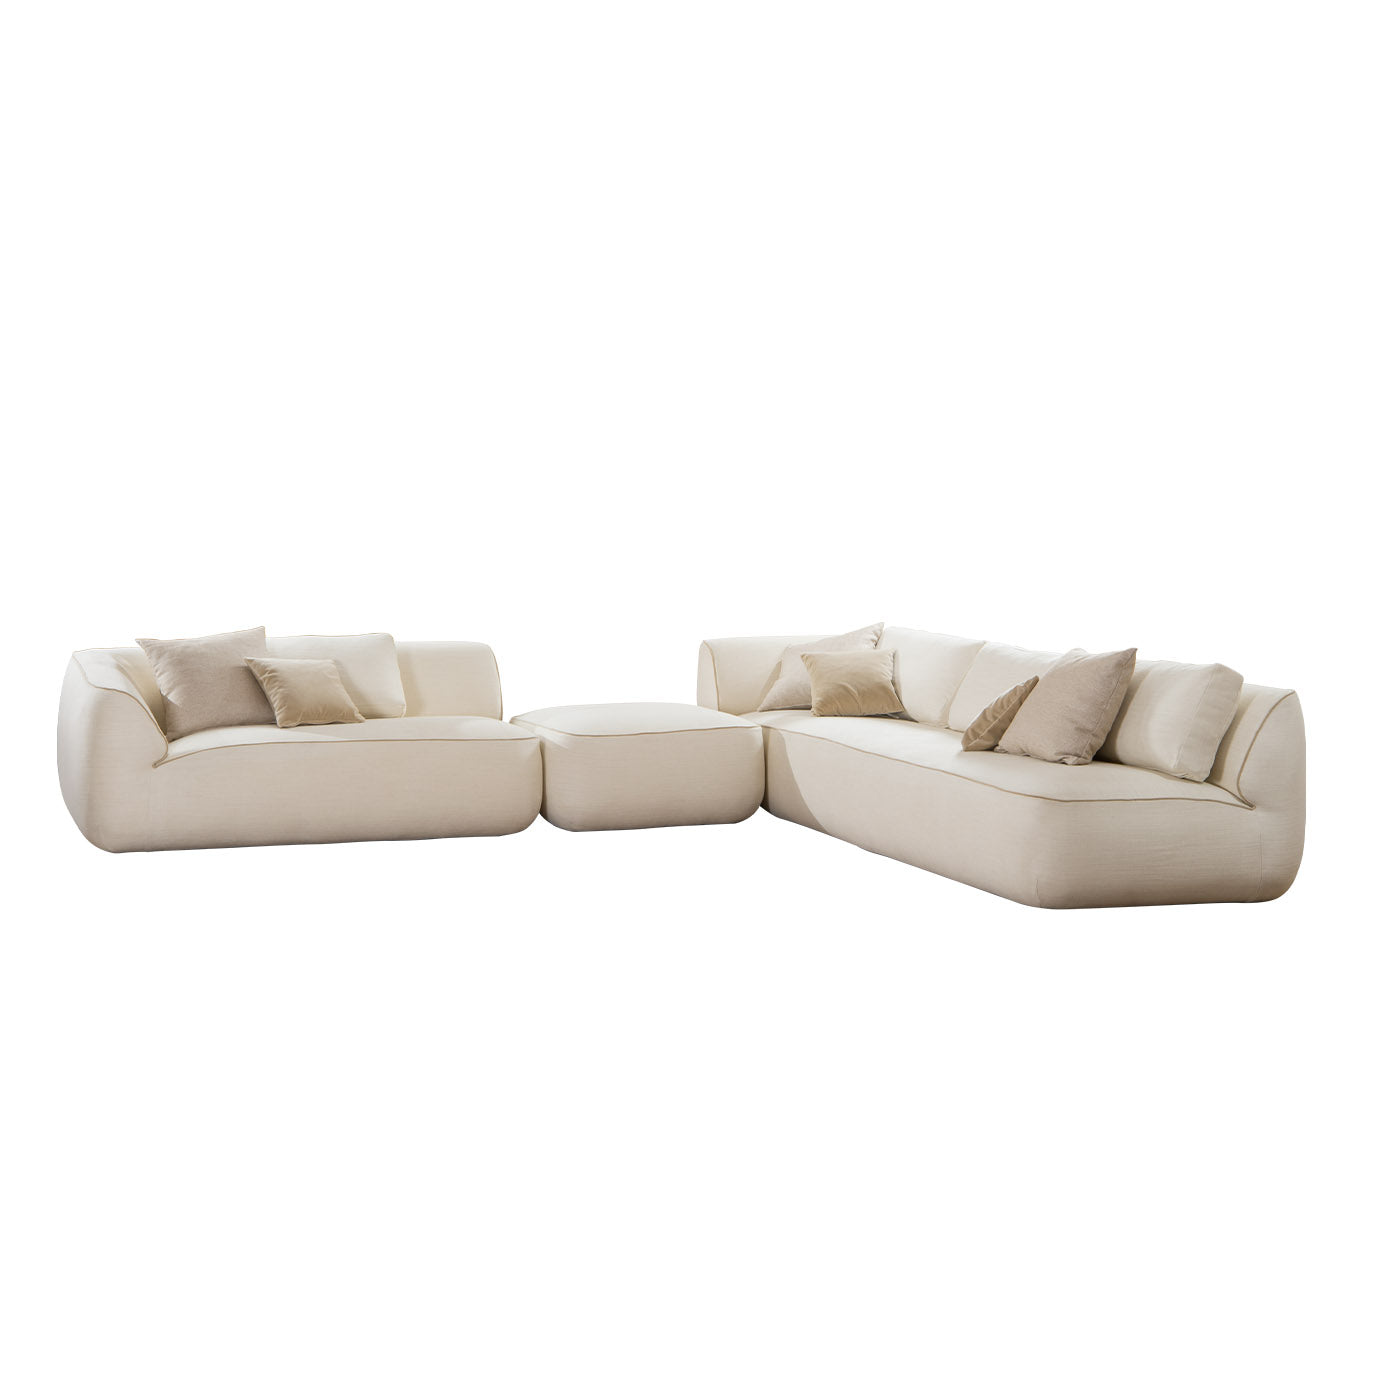 Duna Beige Modular Sofa - Alternative view 3